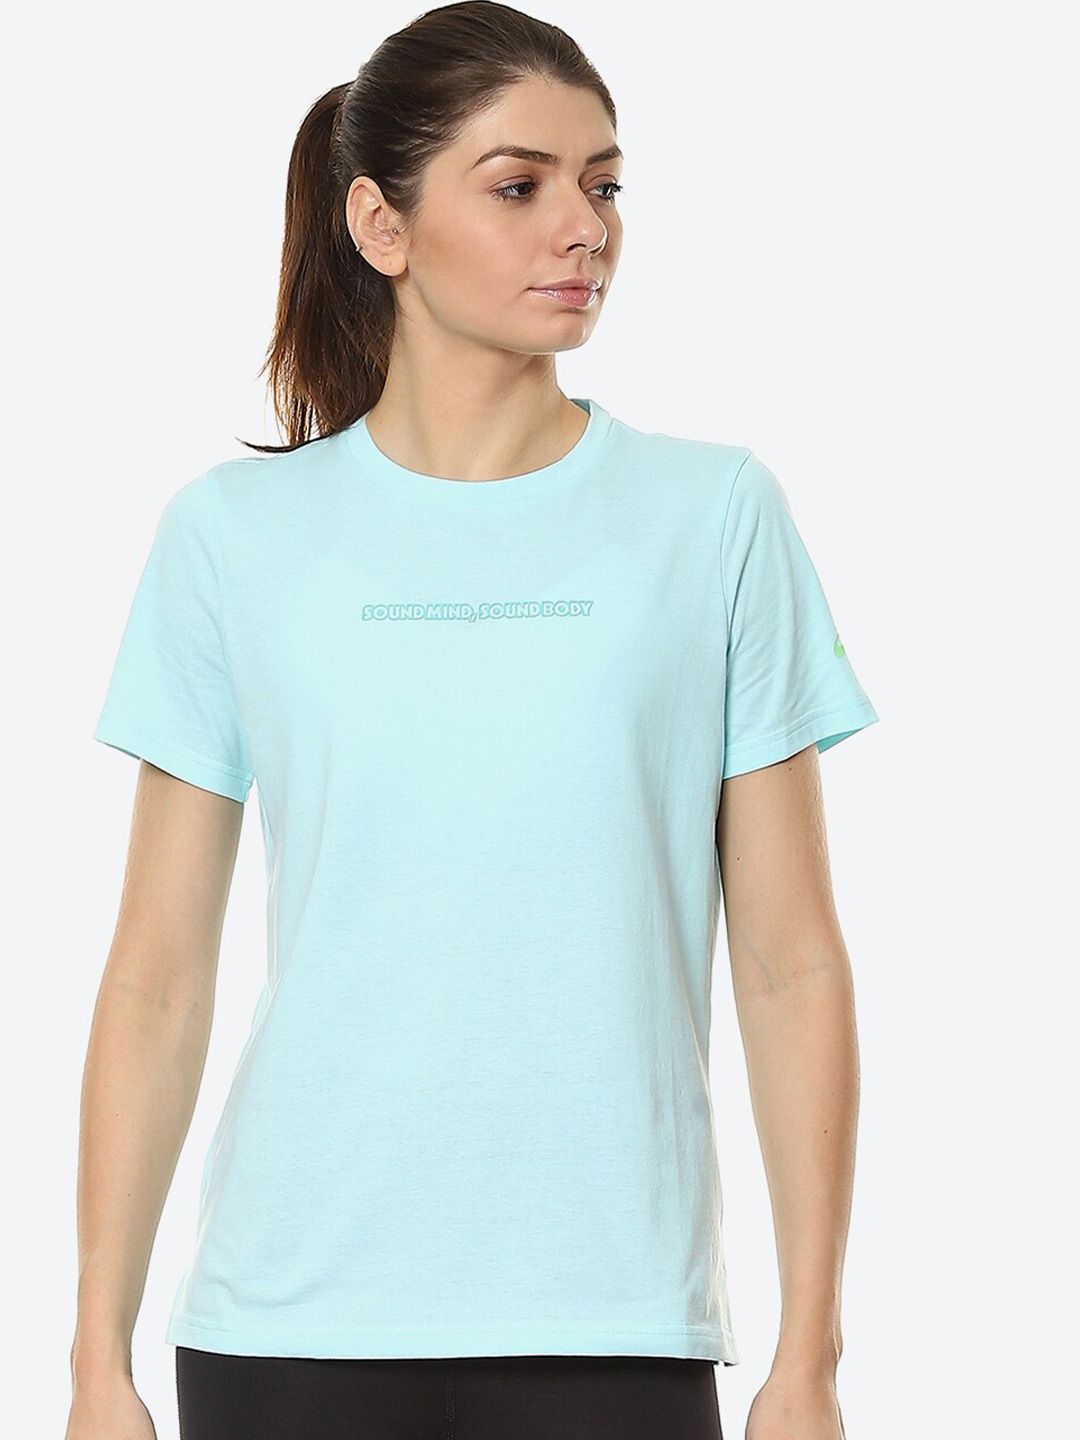 ASICS Women Blue Brand Logo Printed Cotton T-shirt WOLOGO GRAPHIC Price in India